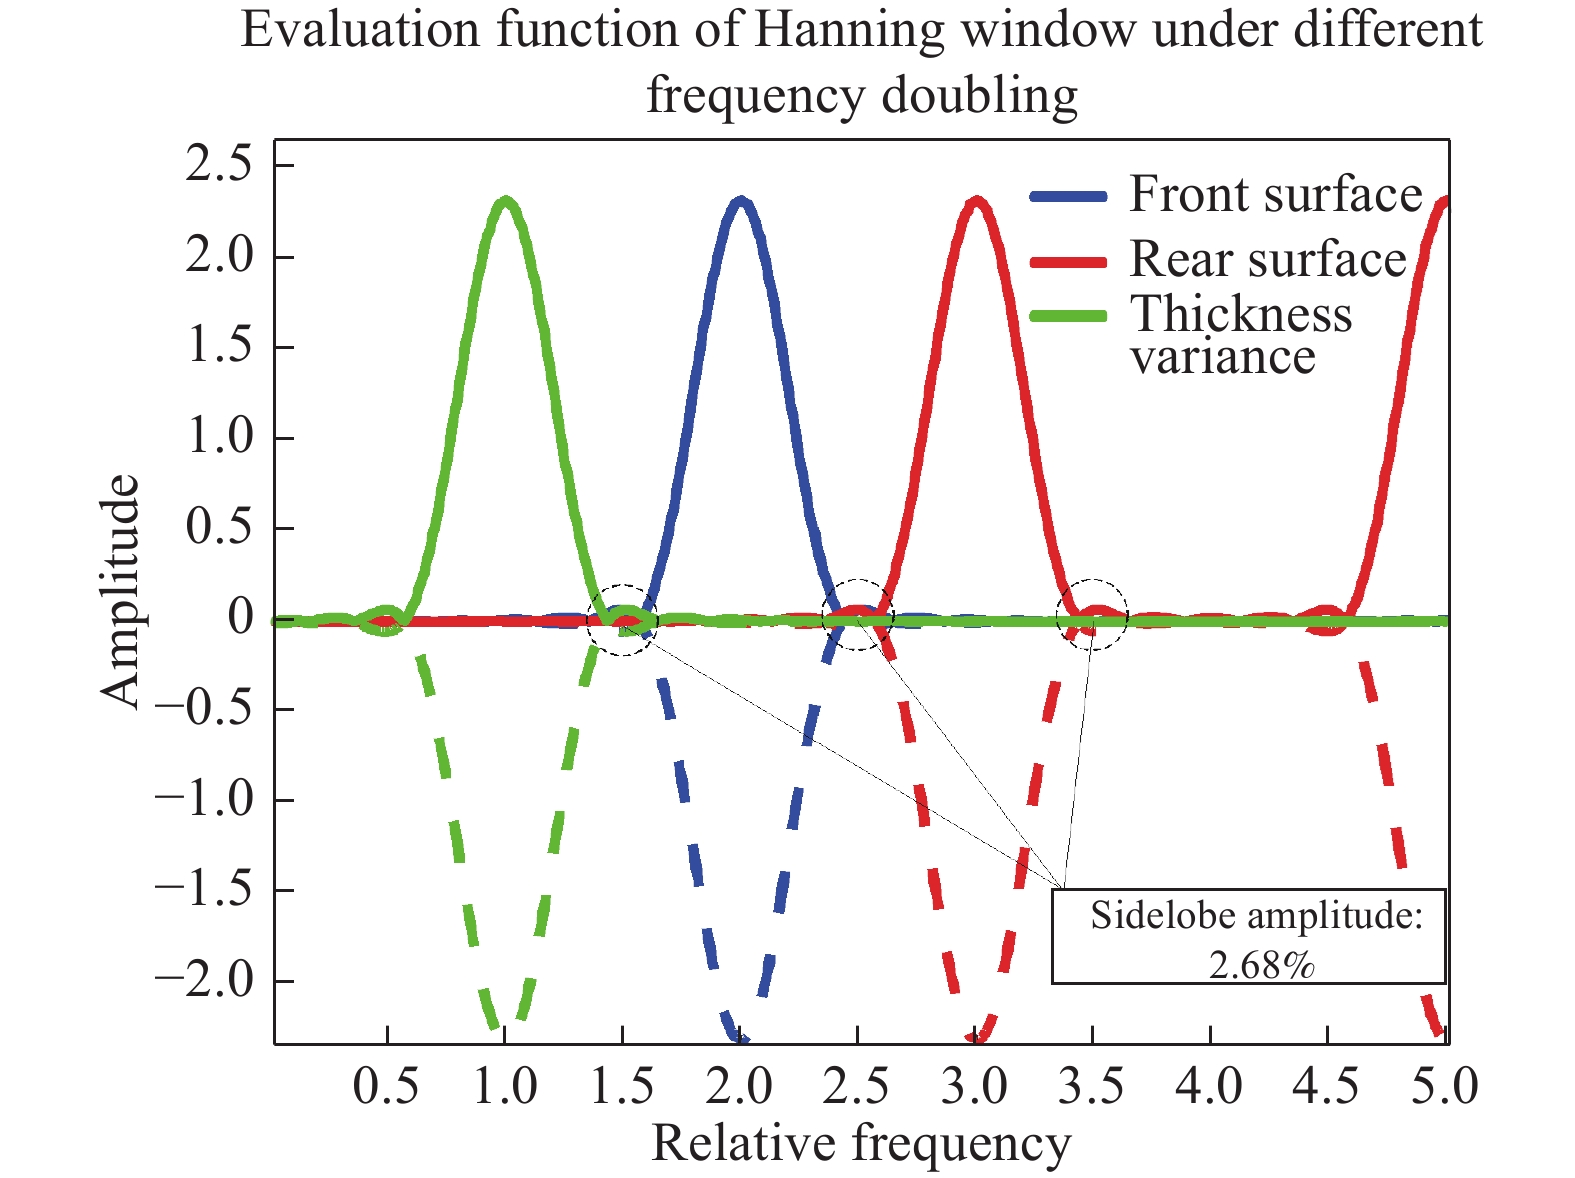 Hanning window evaluation function